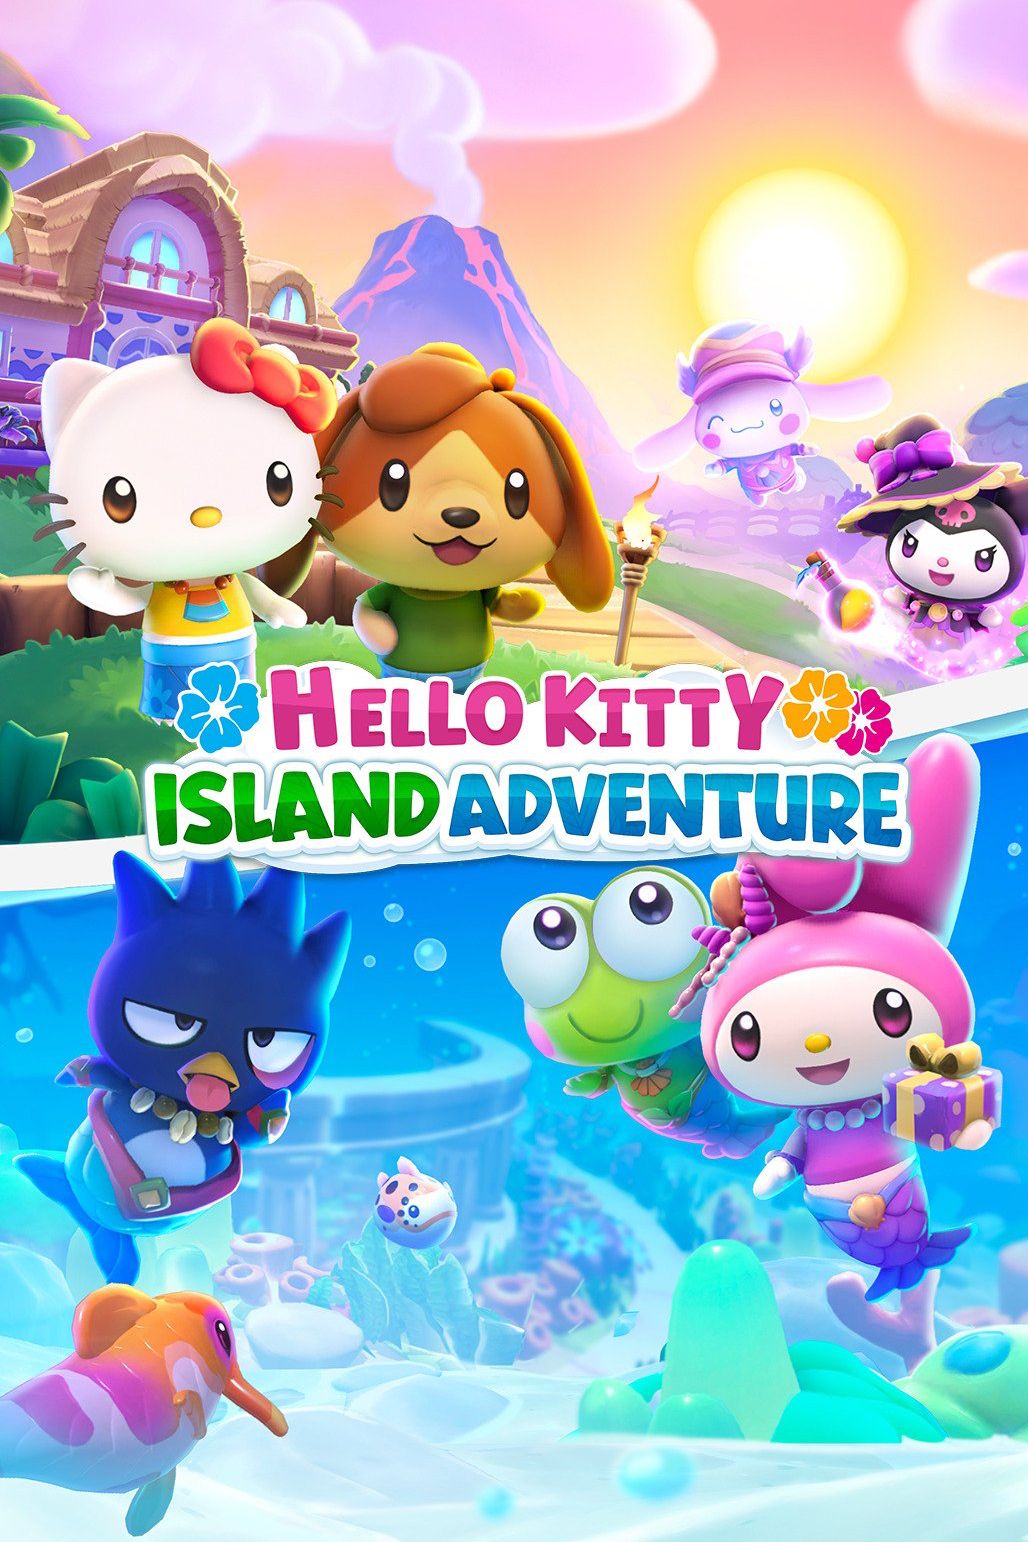 hello kitty island adventure fast travel locations reddit